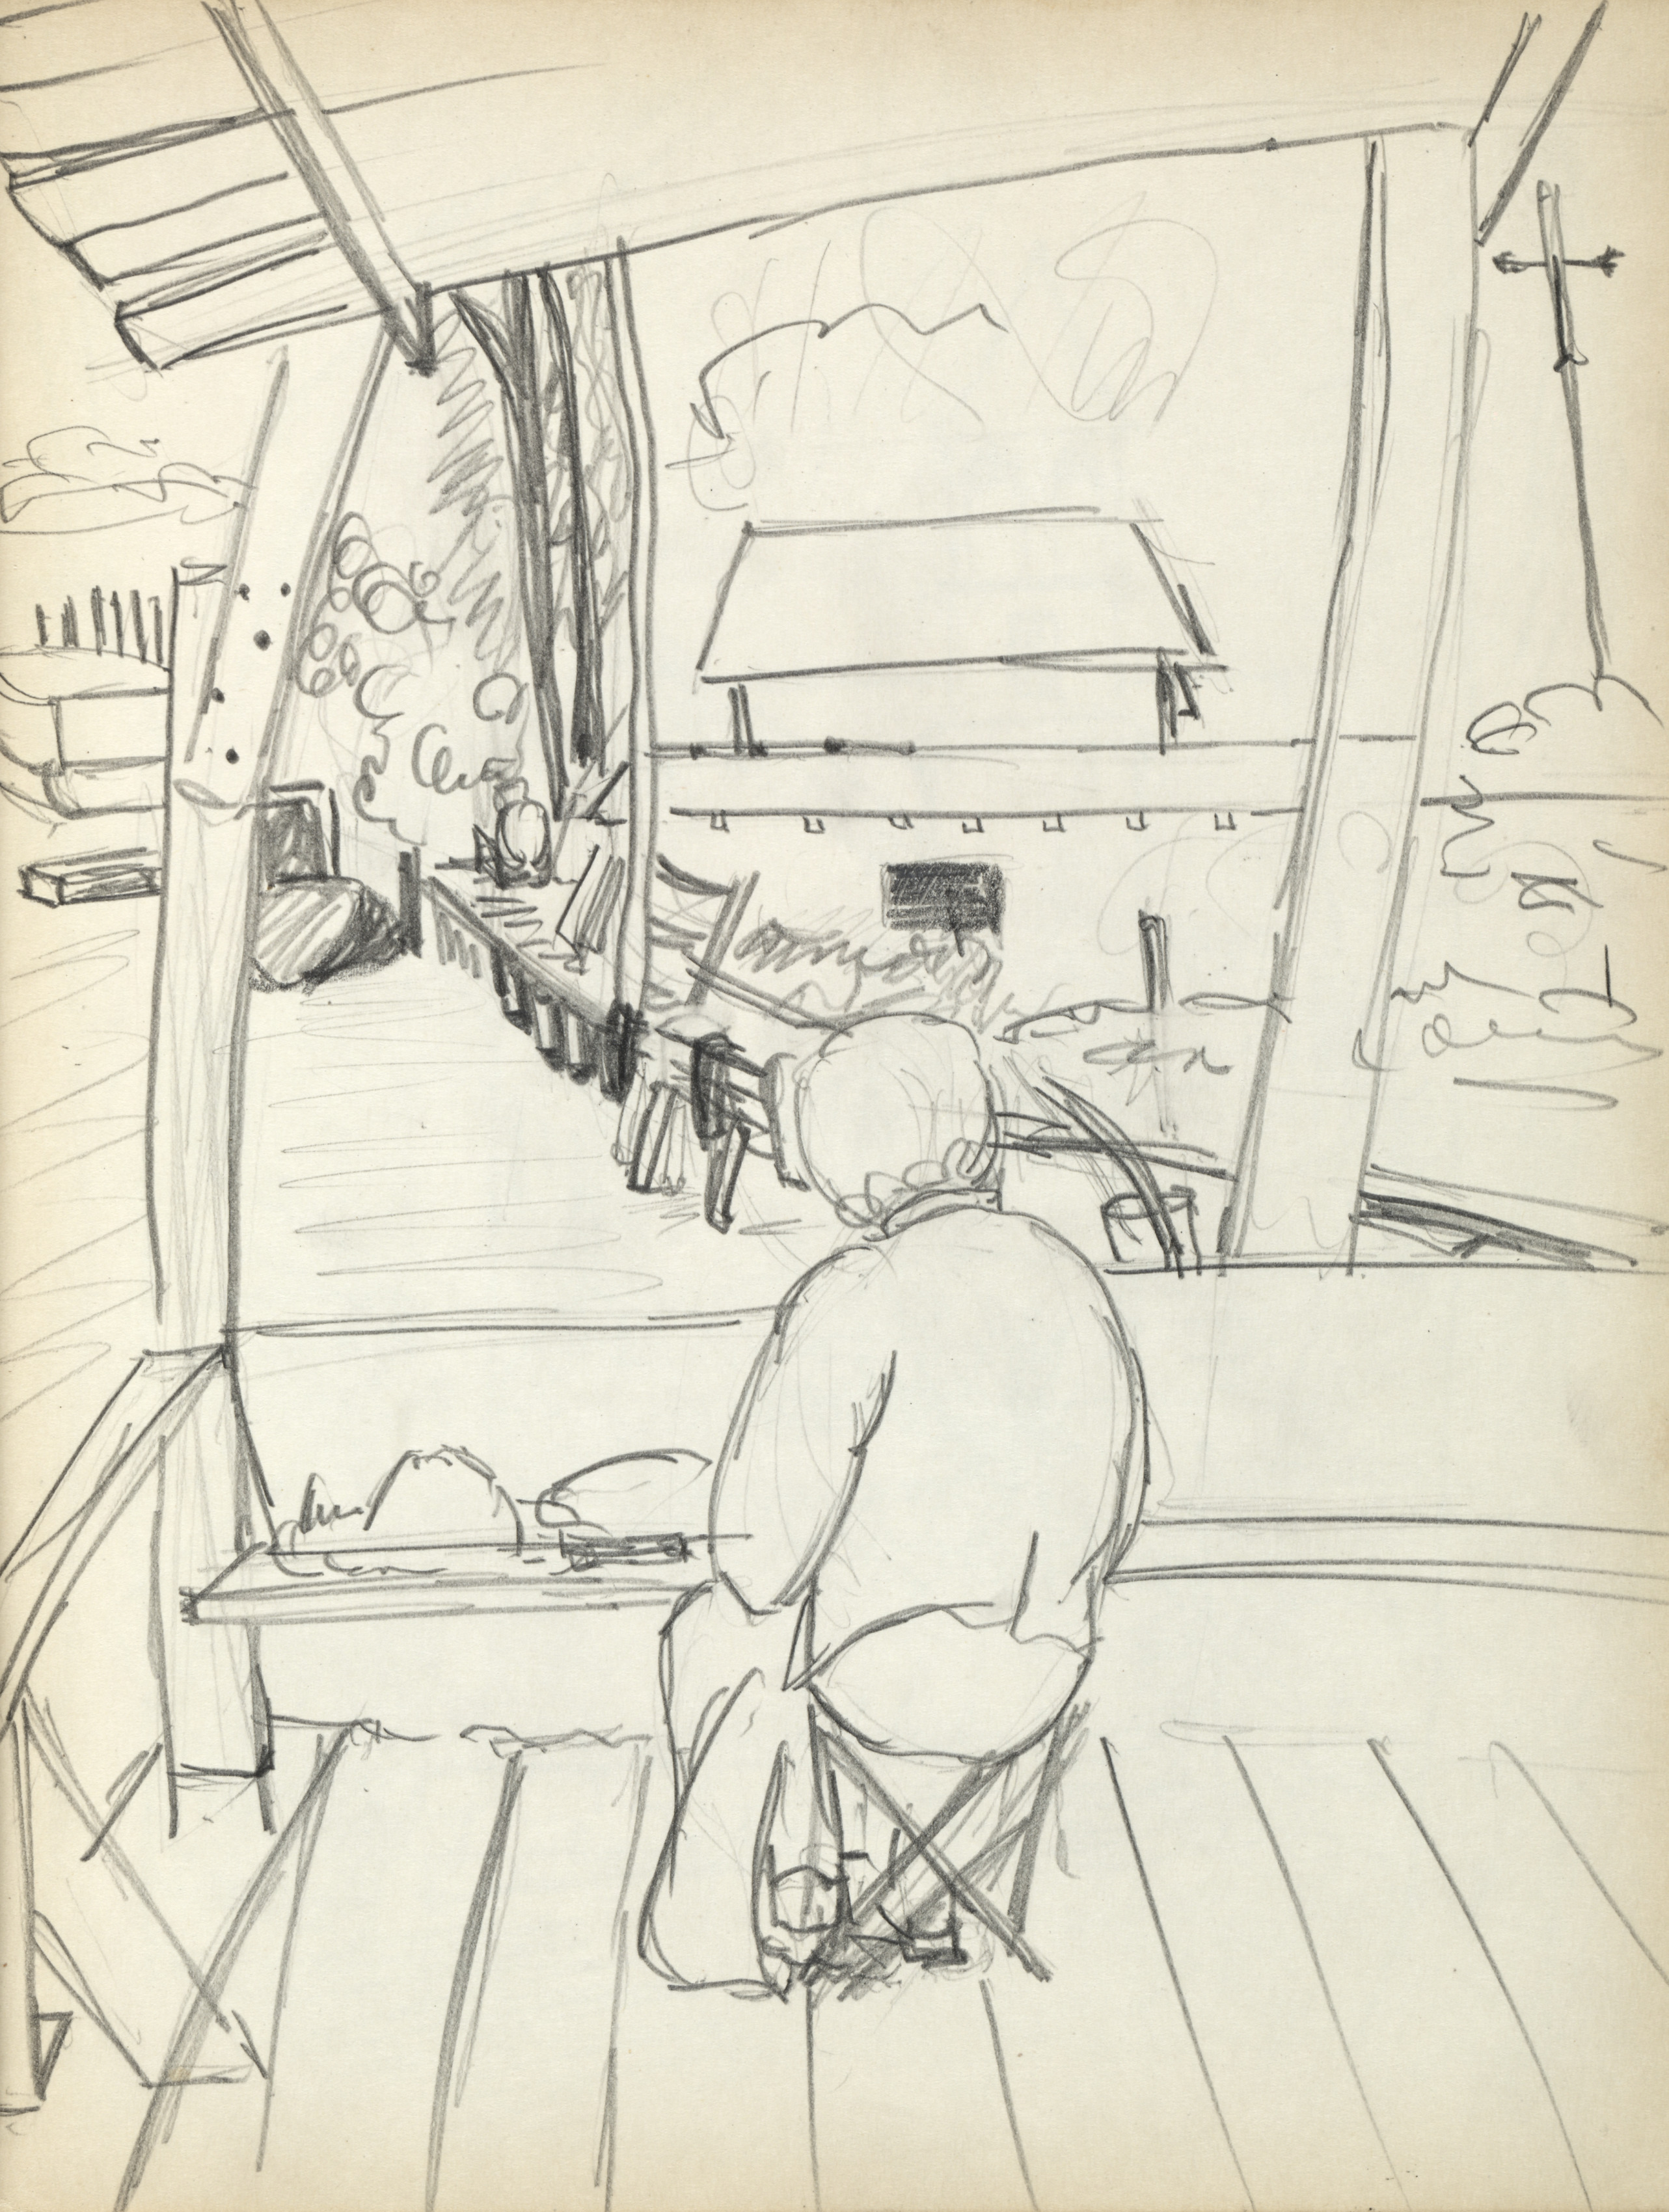 Sketchbook No. 1, page 33: Artists working